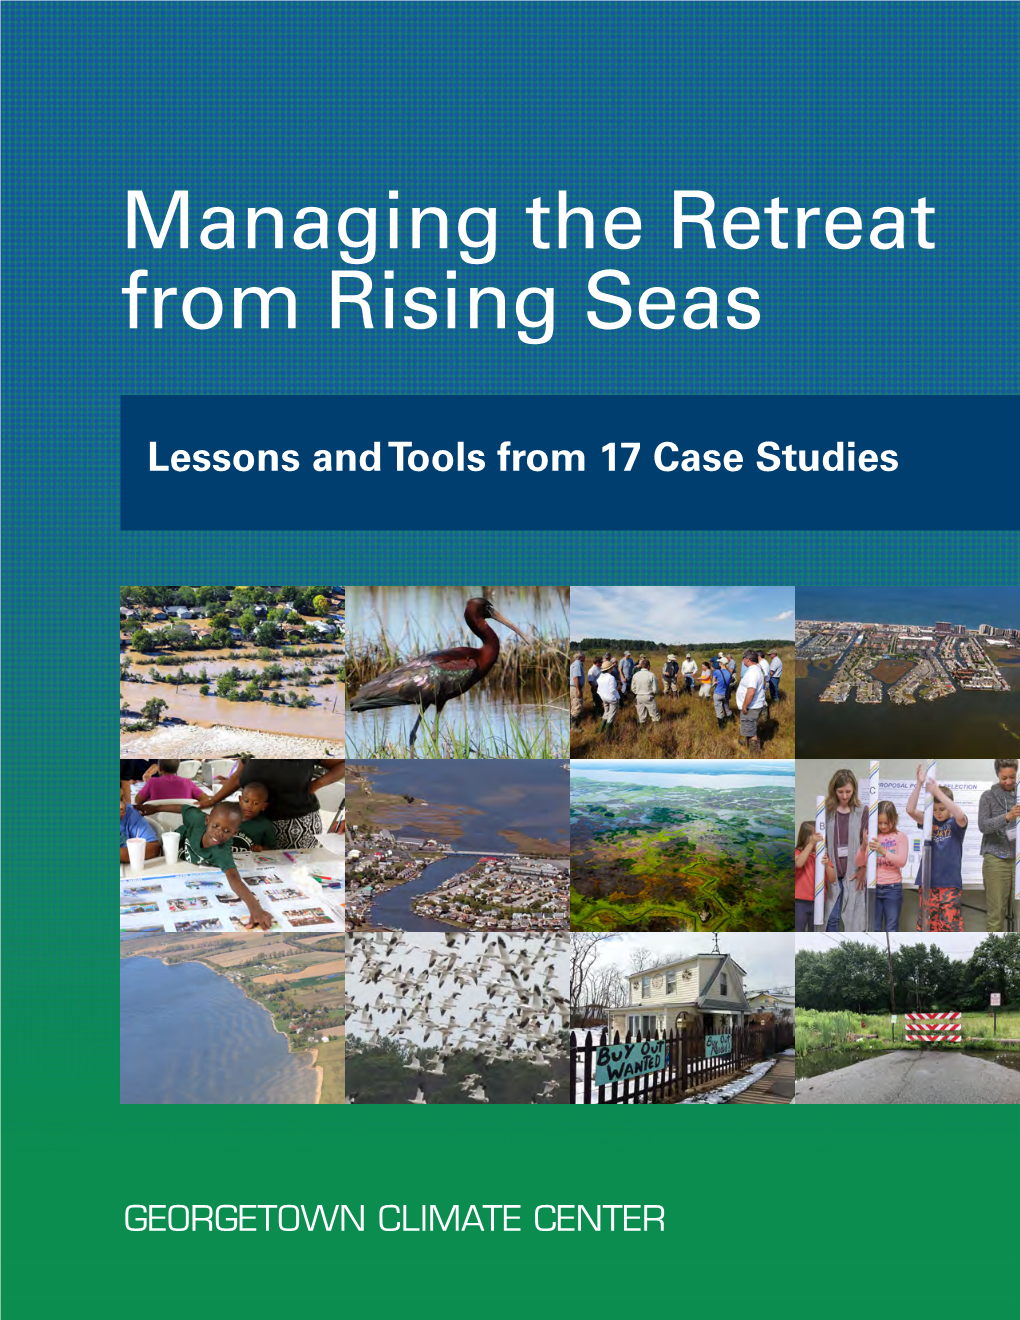 Managing the Retreat from Rising Seas